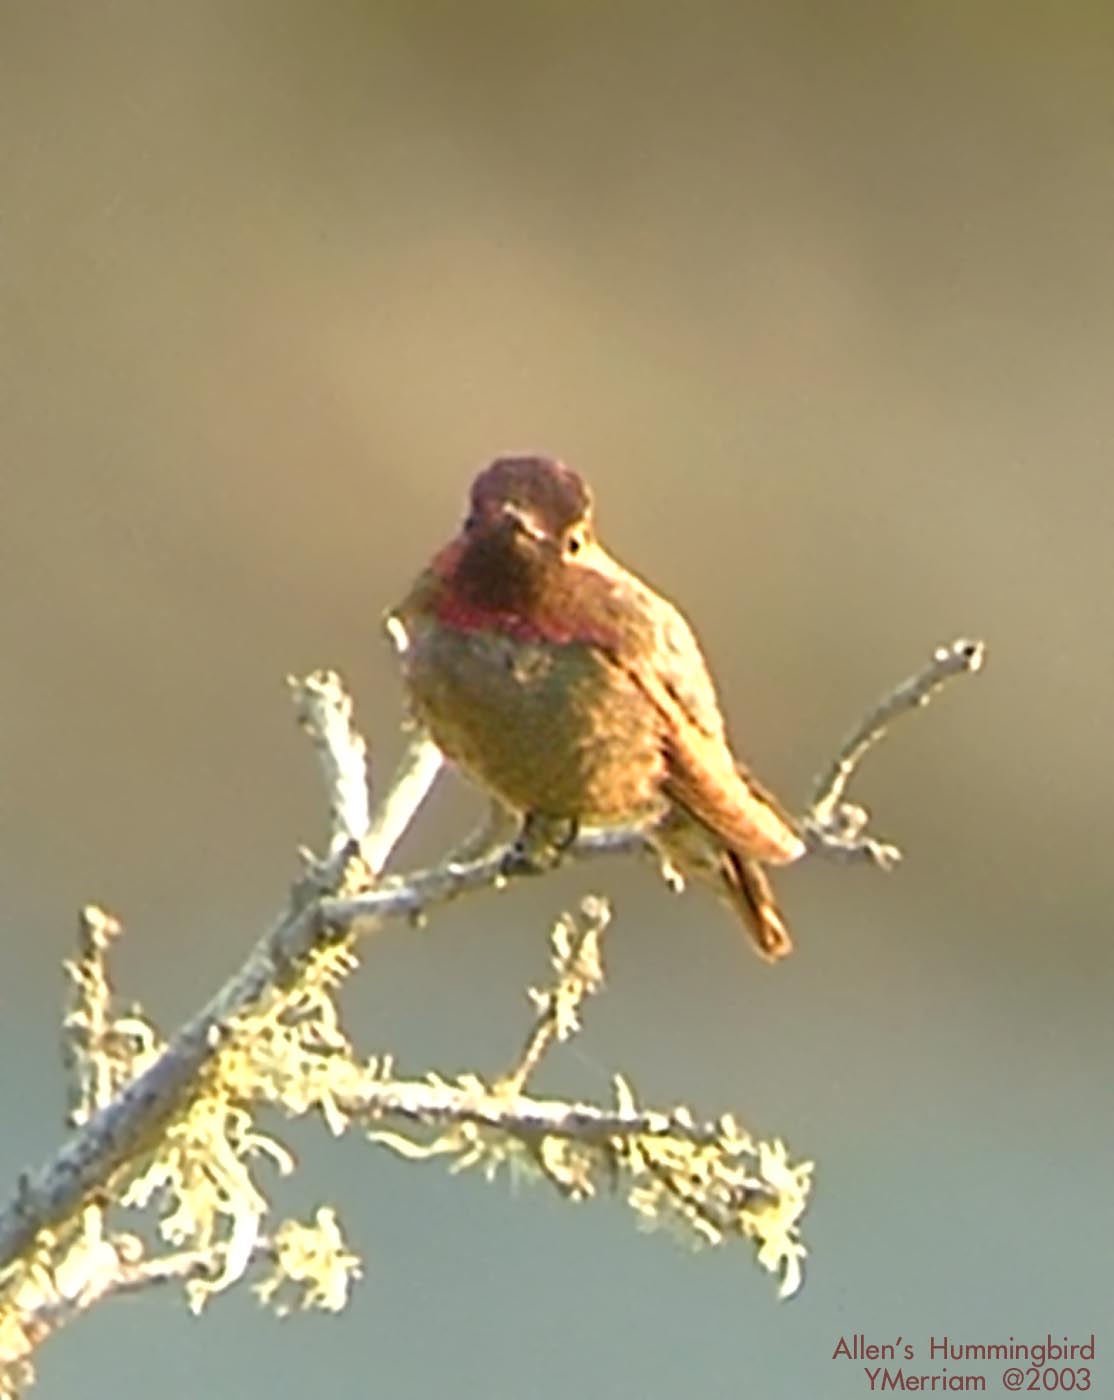 Allens Hummingbird Male